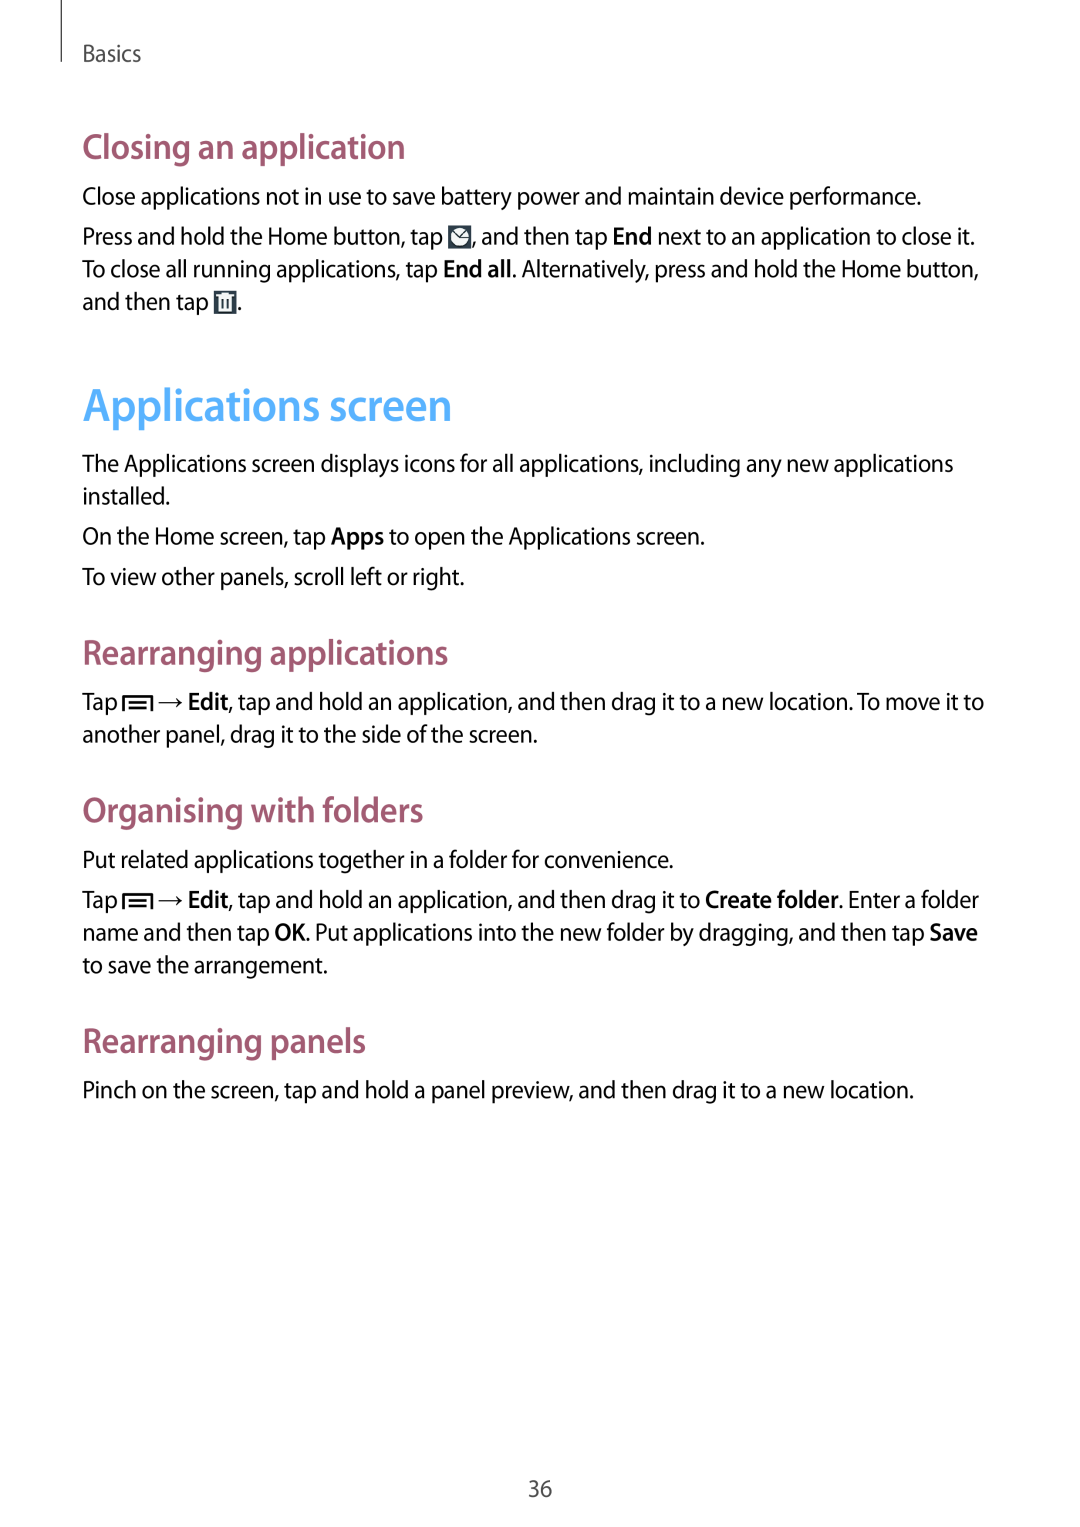 Samsung GT-N5100 Applications screen, Closing an application, Rearranging applications, Organising with folders, Basics 